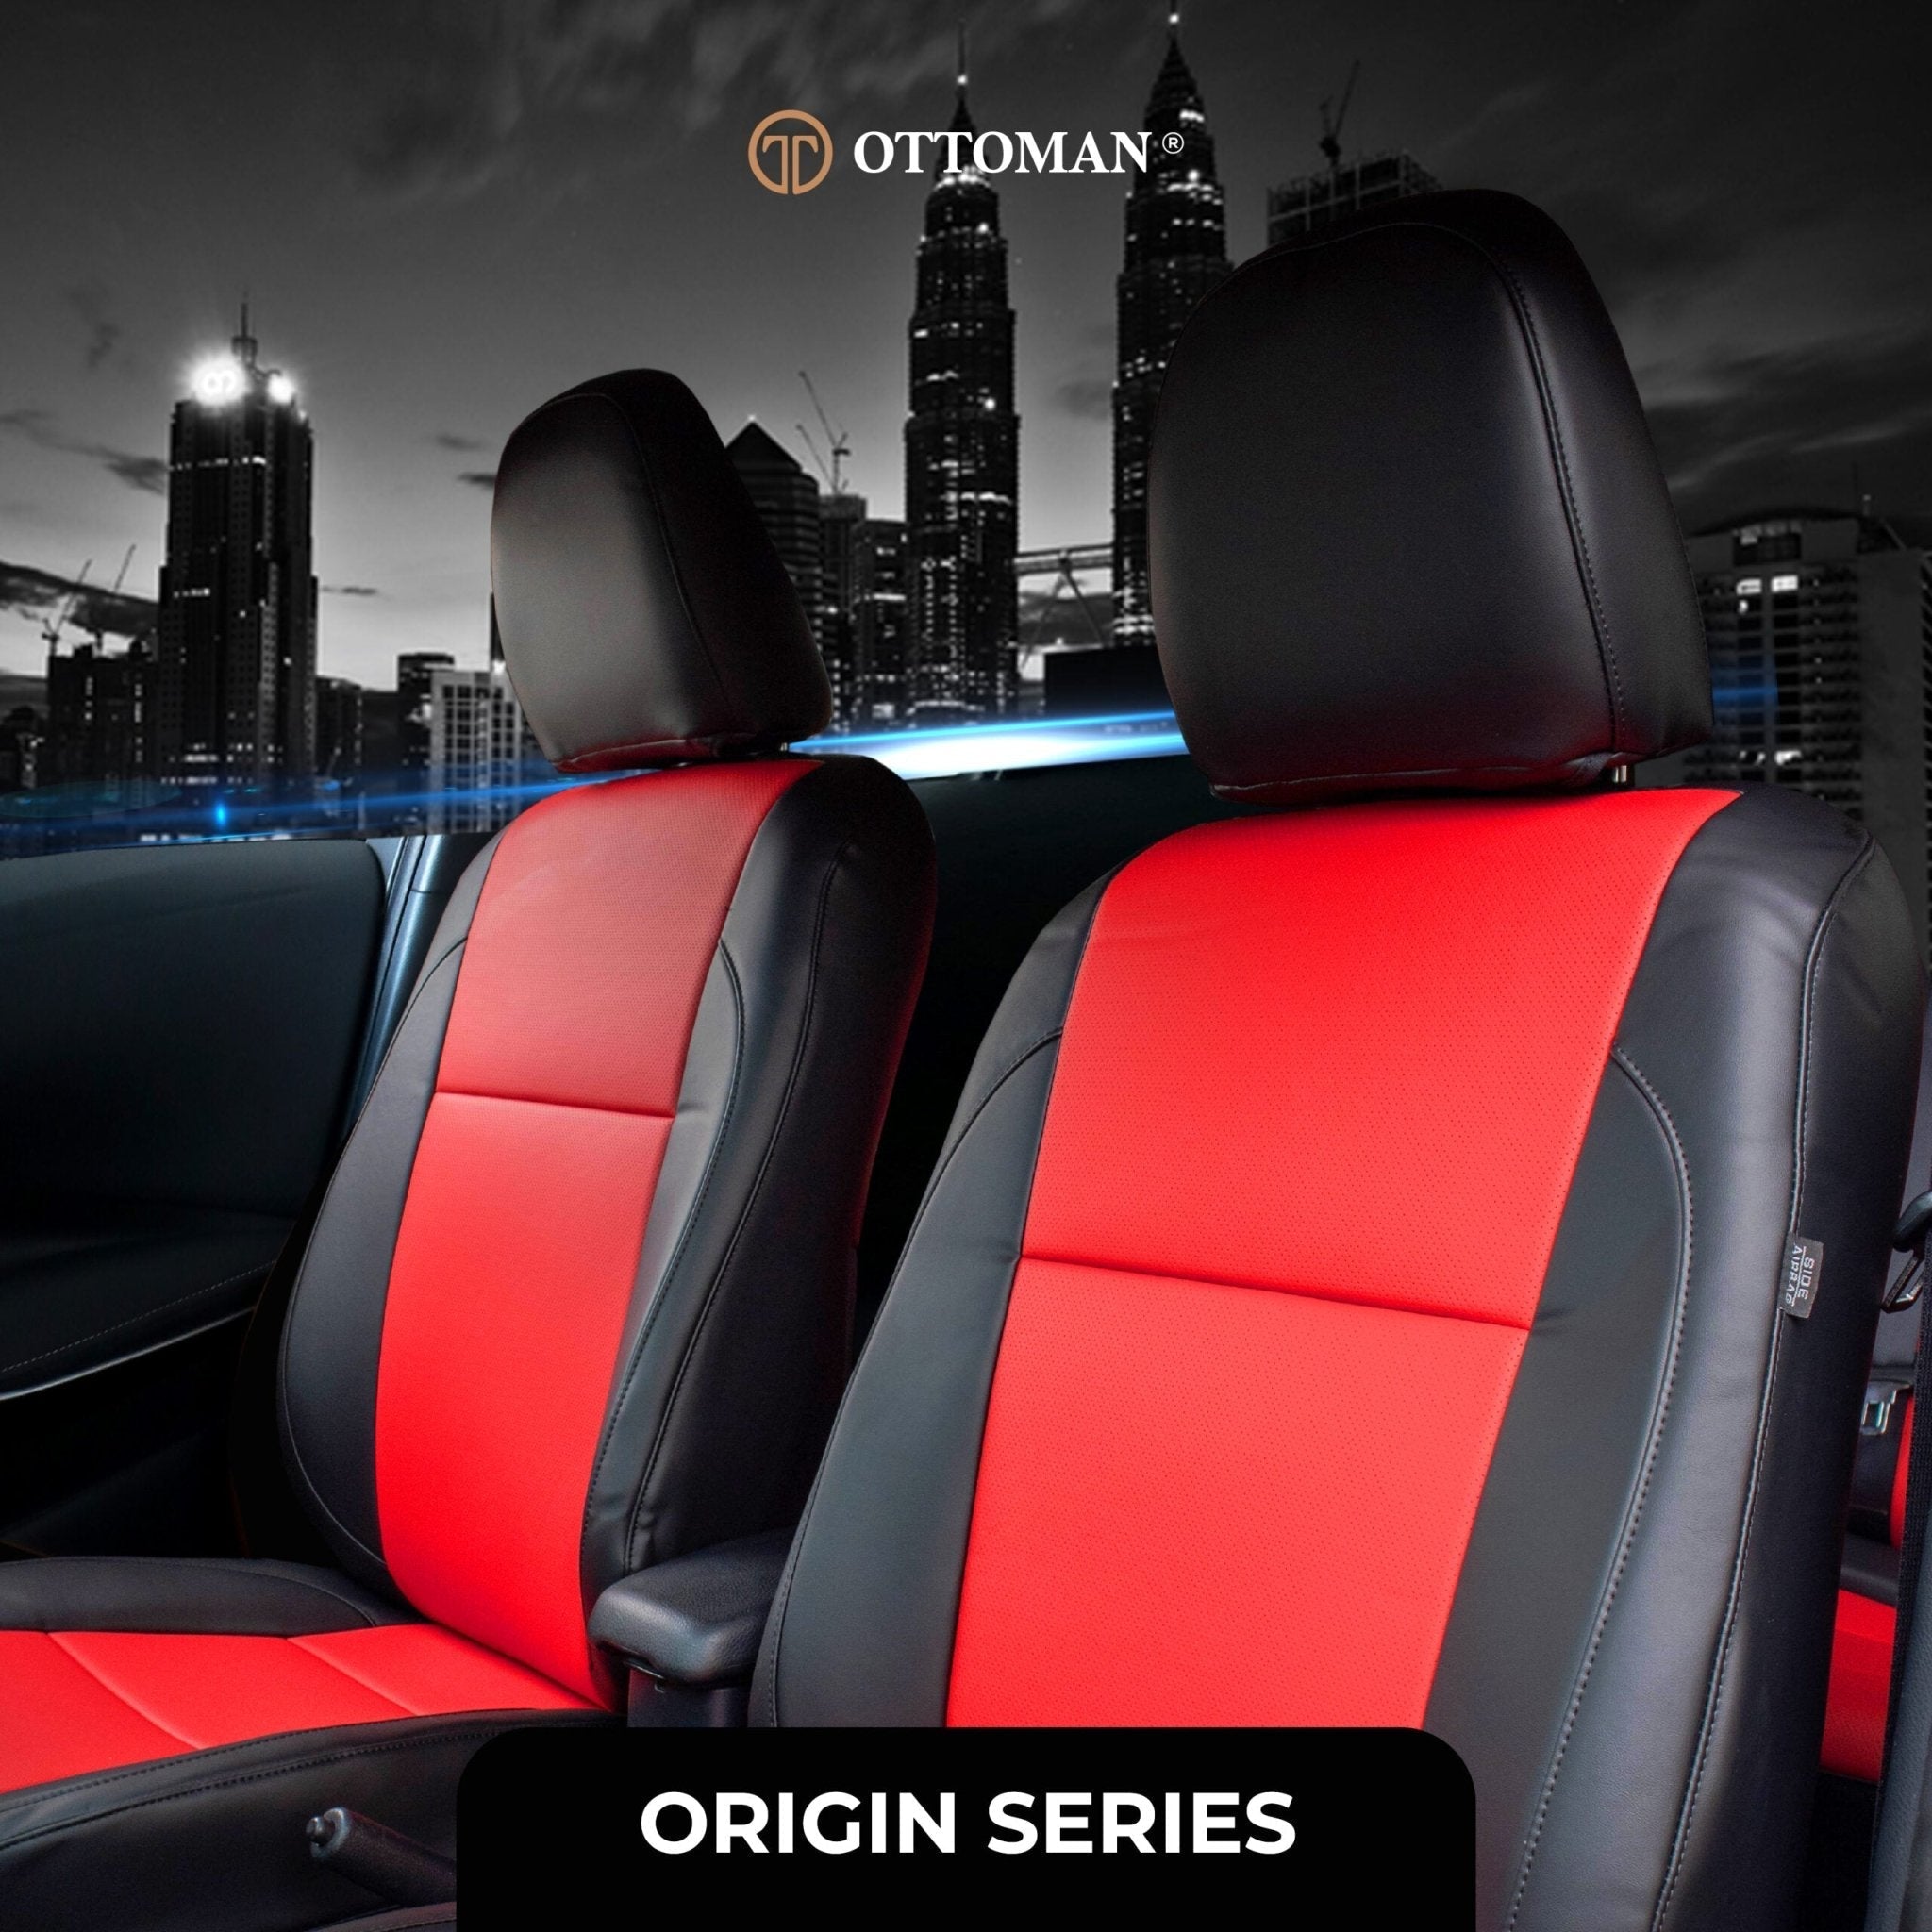 Suzuki Swift (2017-Present) Ottoman Seat Cover Seat Cover in Klang Selangor, Penang, Johor Bahru - Ottoman Car Mats